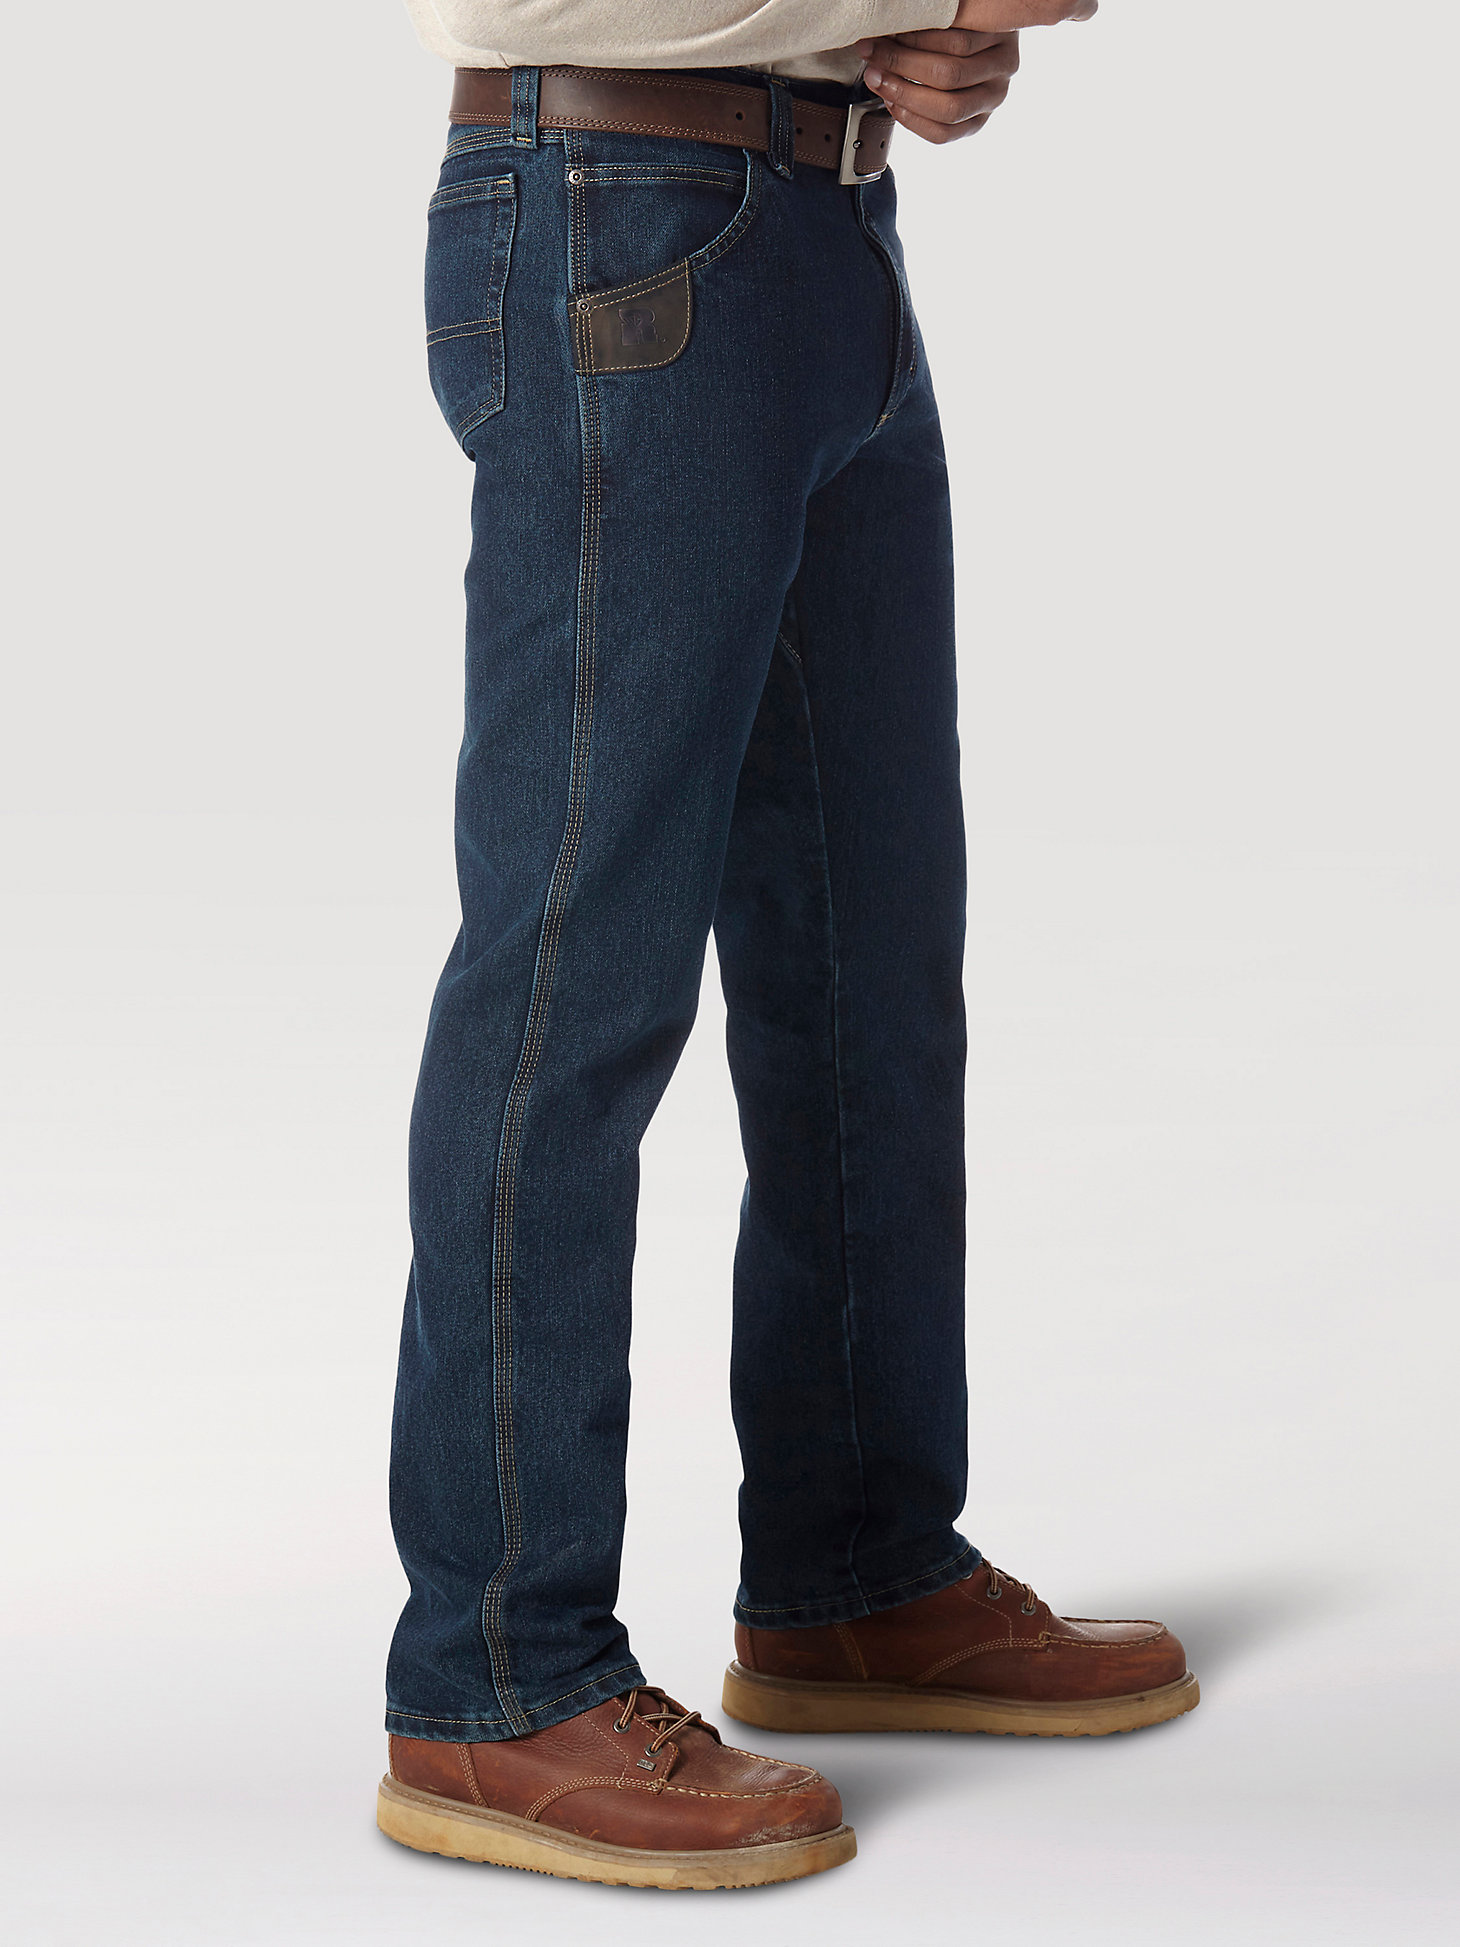 Wrangler® RIGGS Workwear® Advanced Comfort Five Pocket Jean in Dark Tint alternative view 1